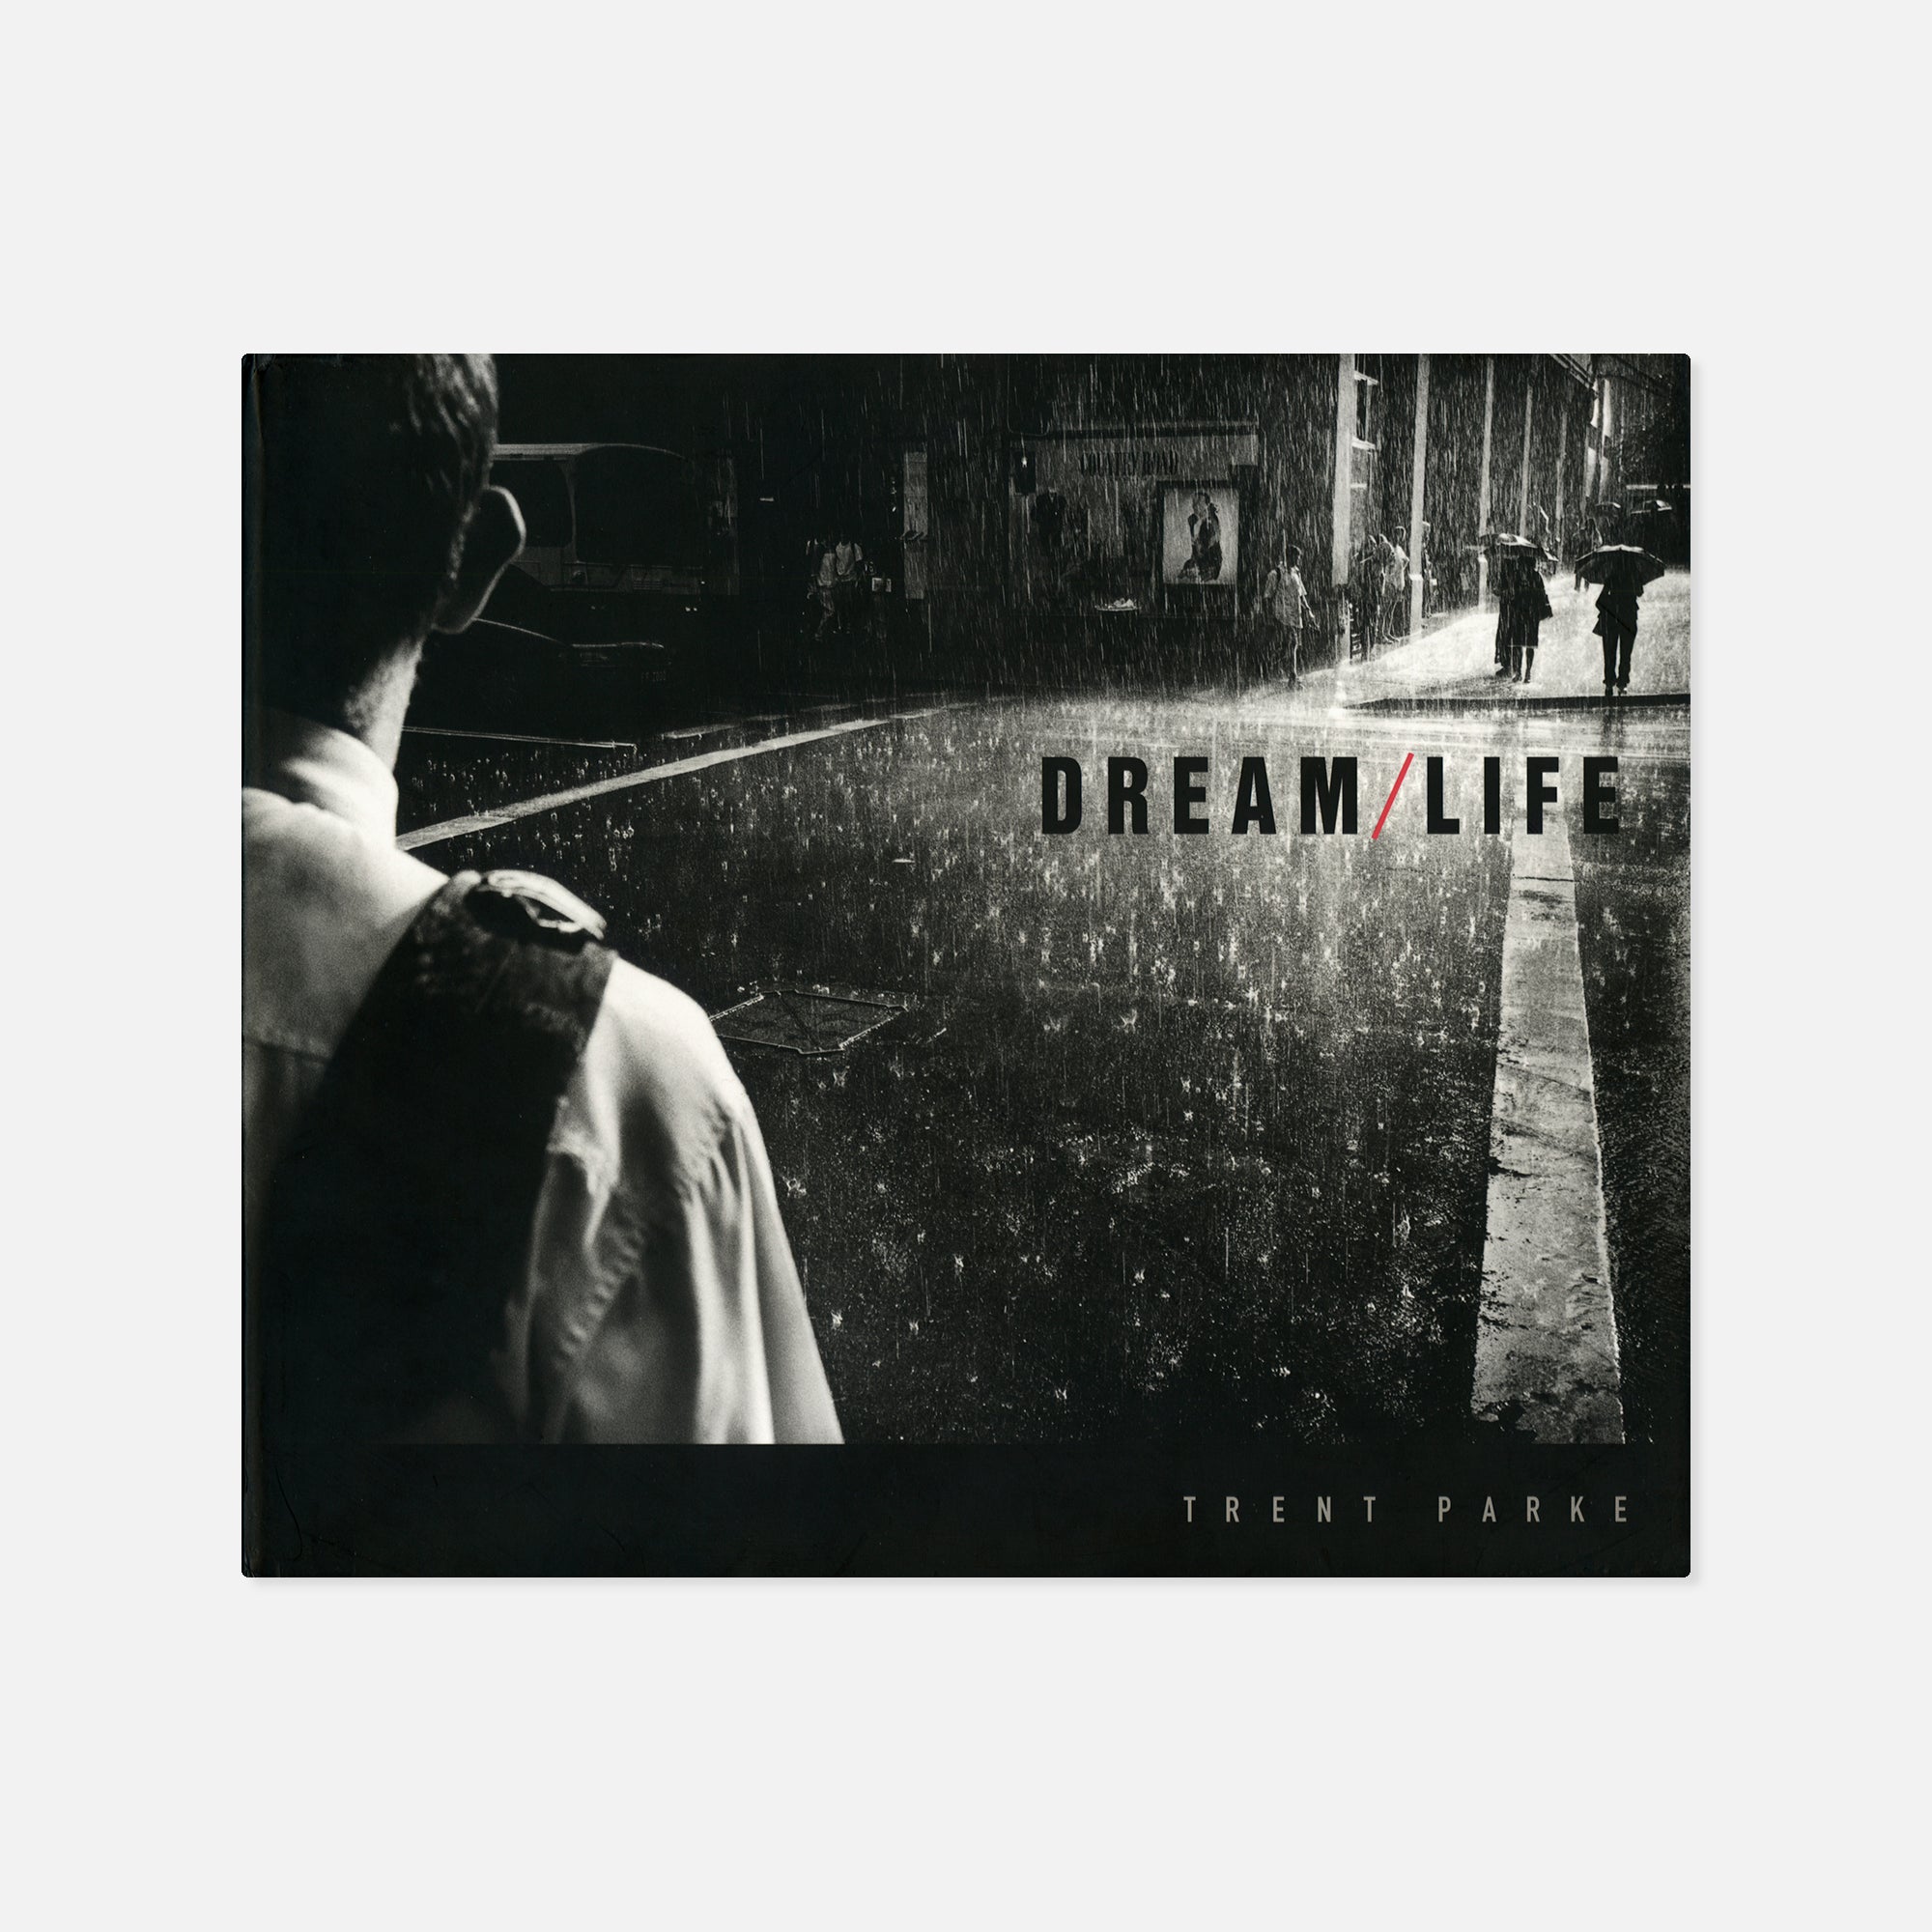 Trent Parke — Dream/Life